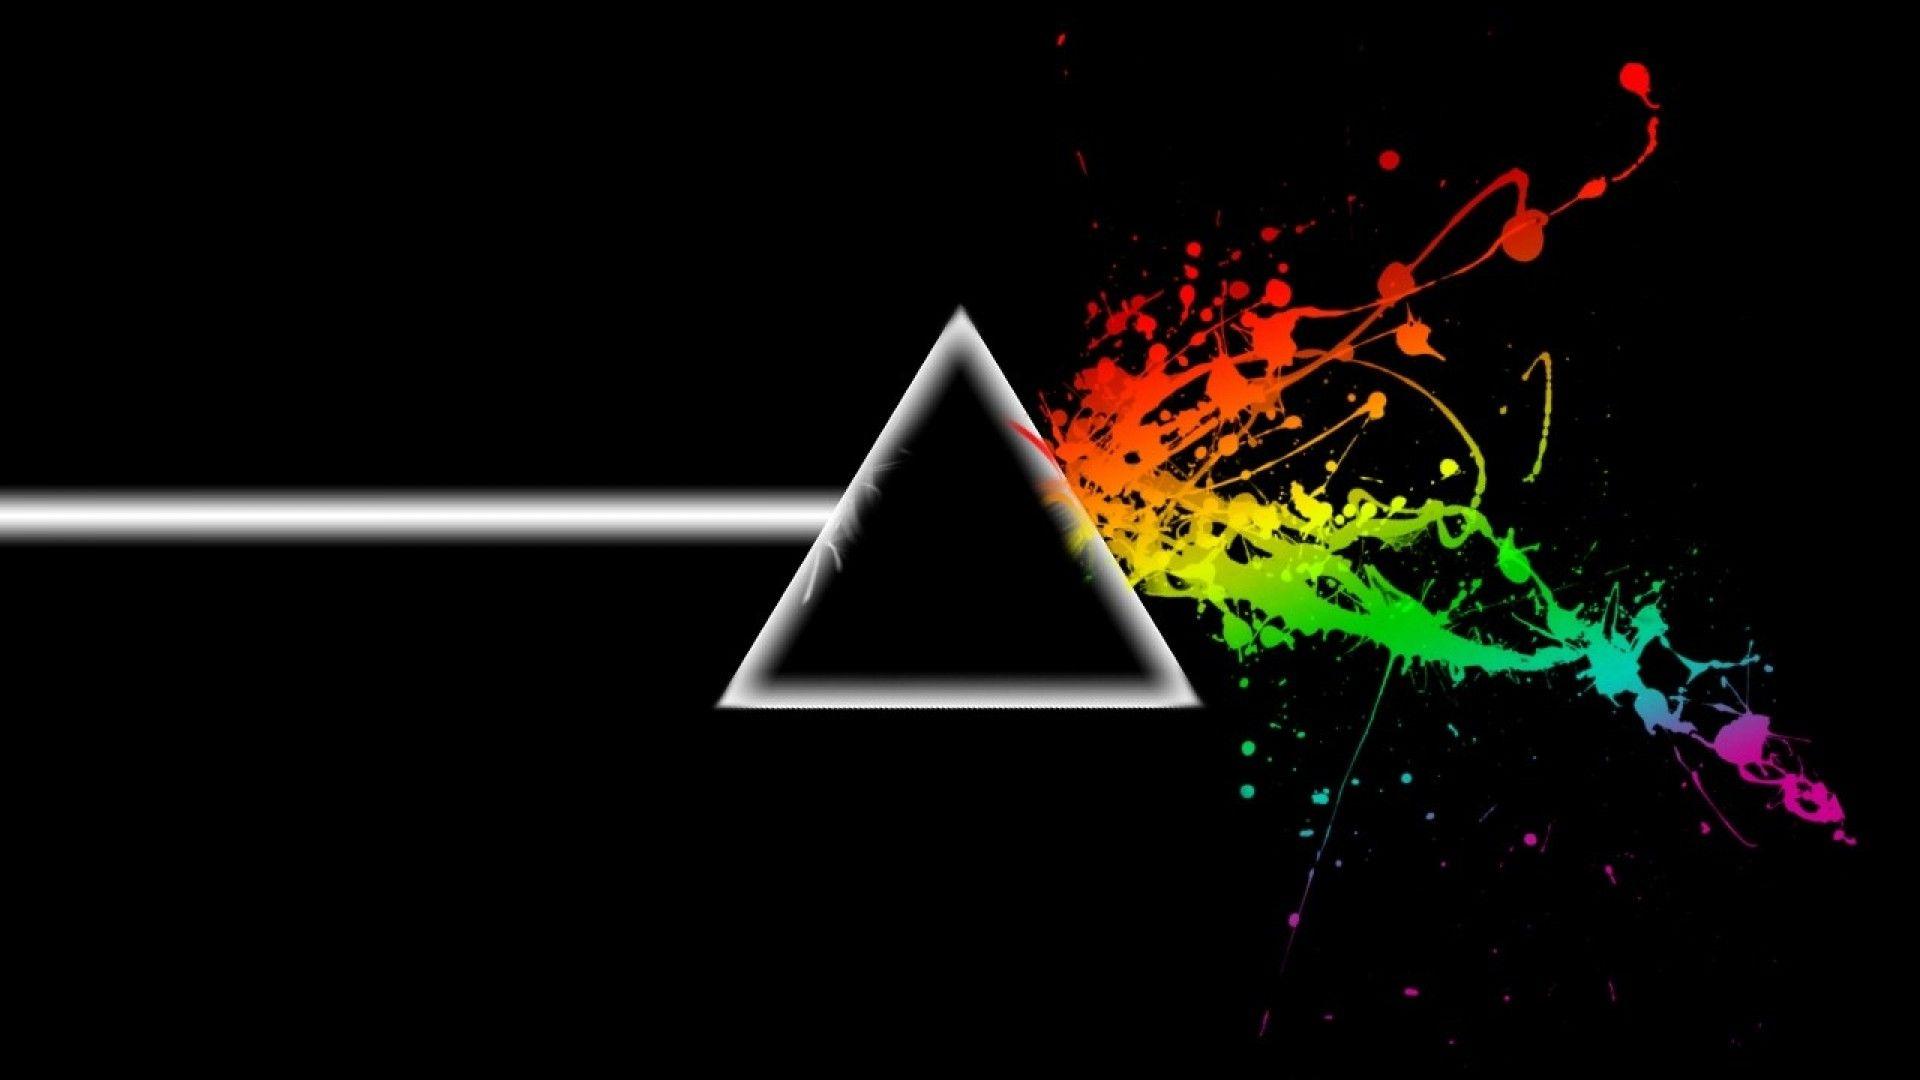 Pink Floyd Prism wallpaper